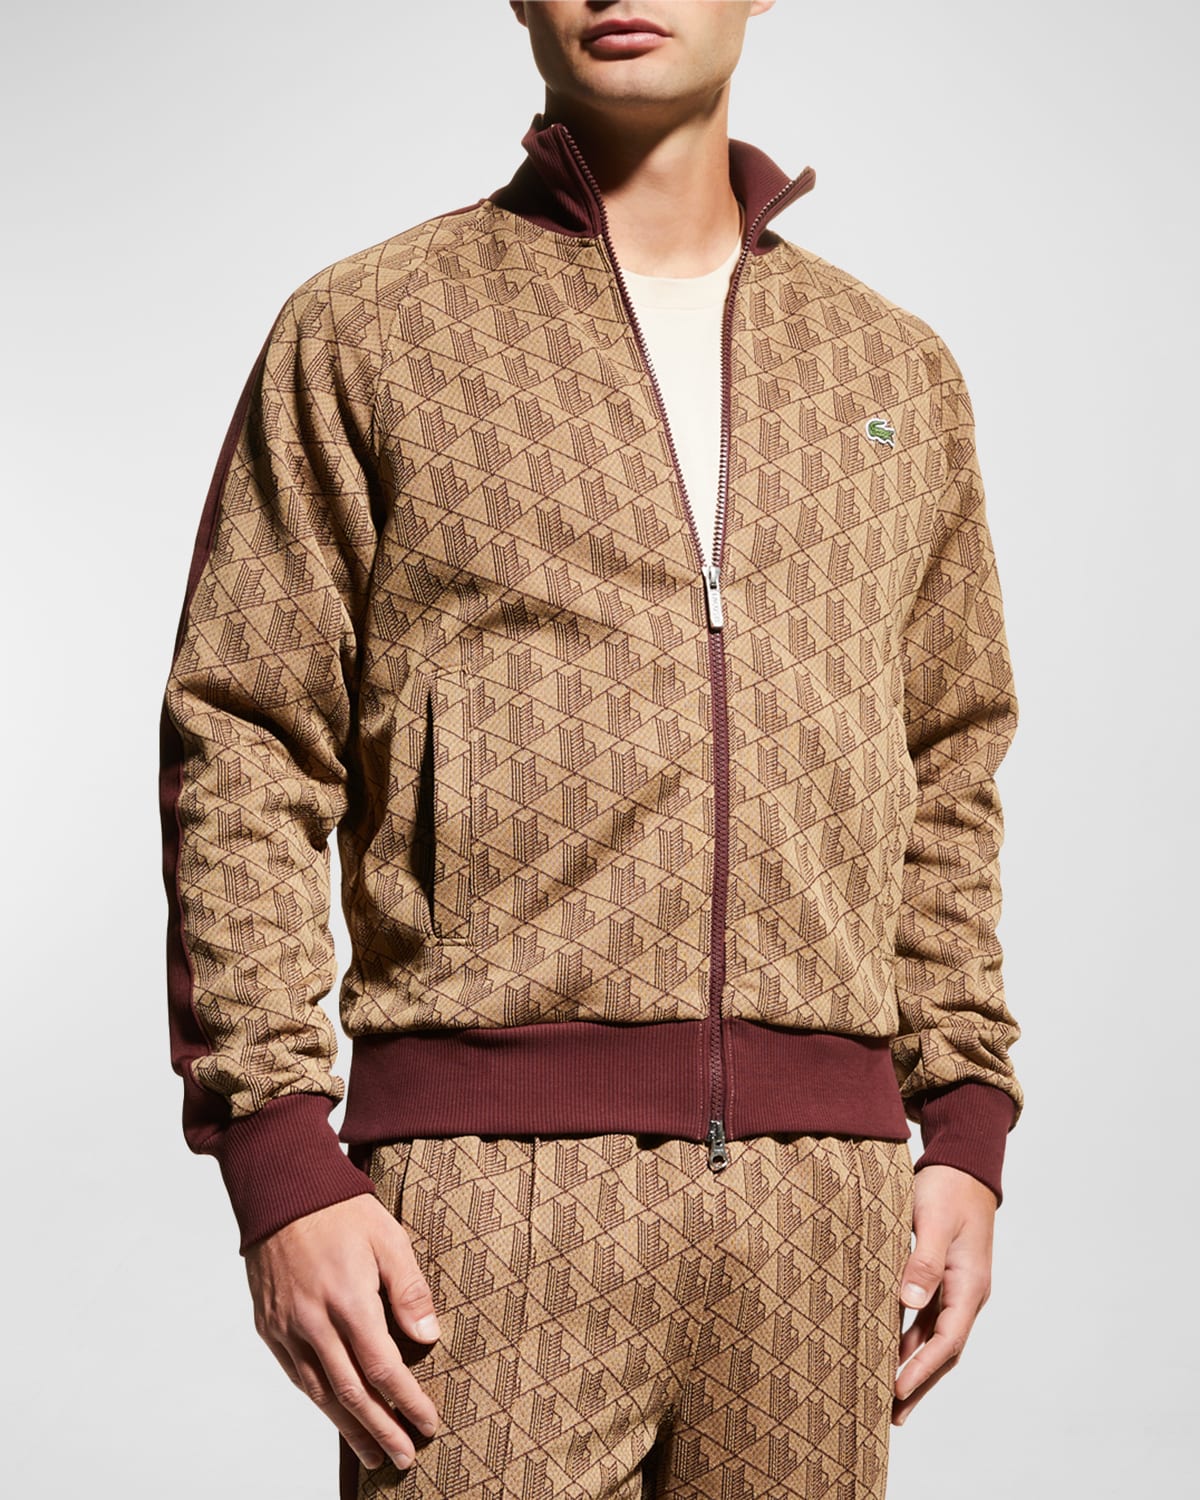 Lacoste Men's Full-Zip Jacquard Monogram Sweatshirt